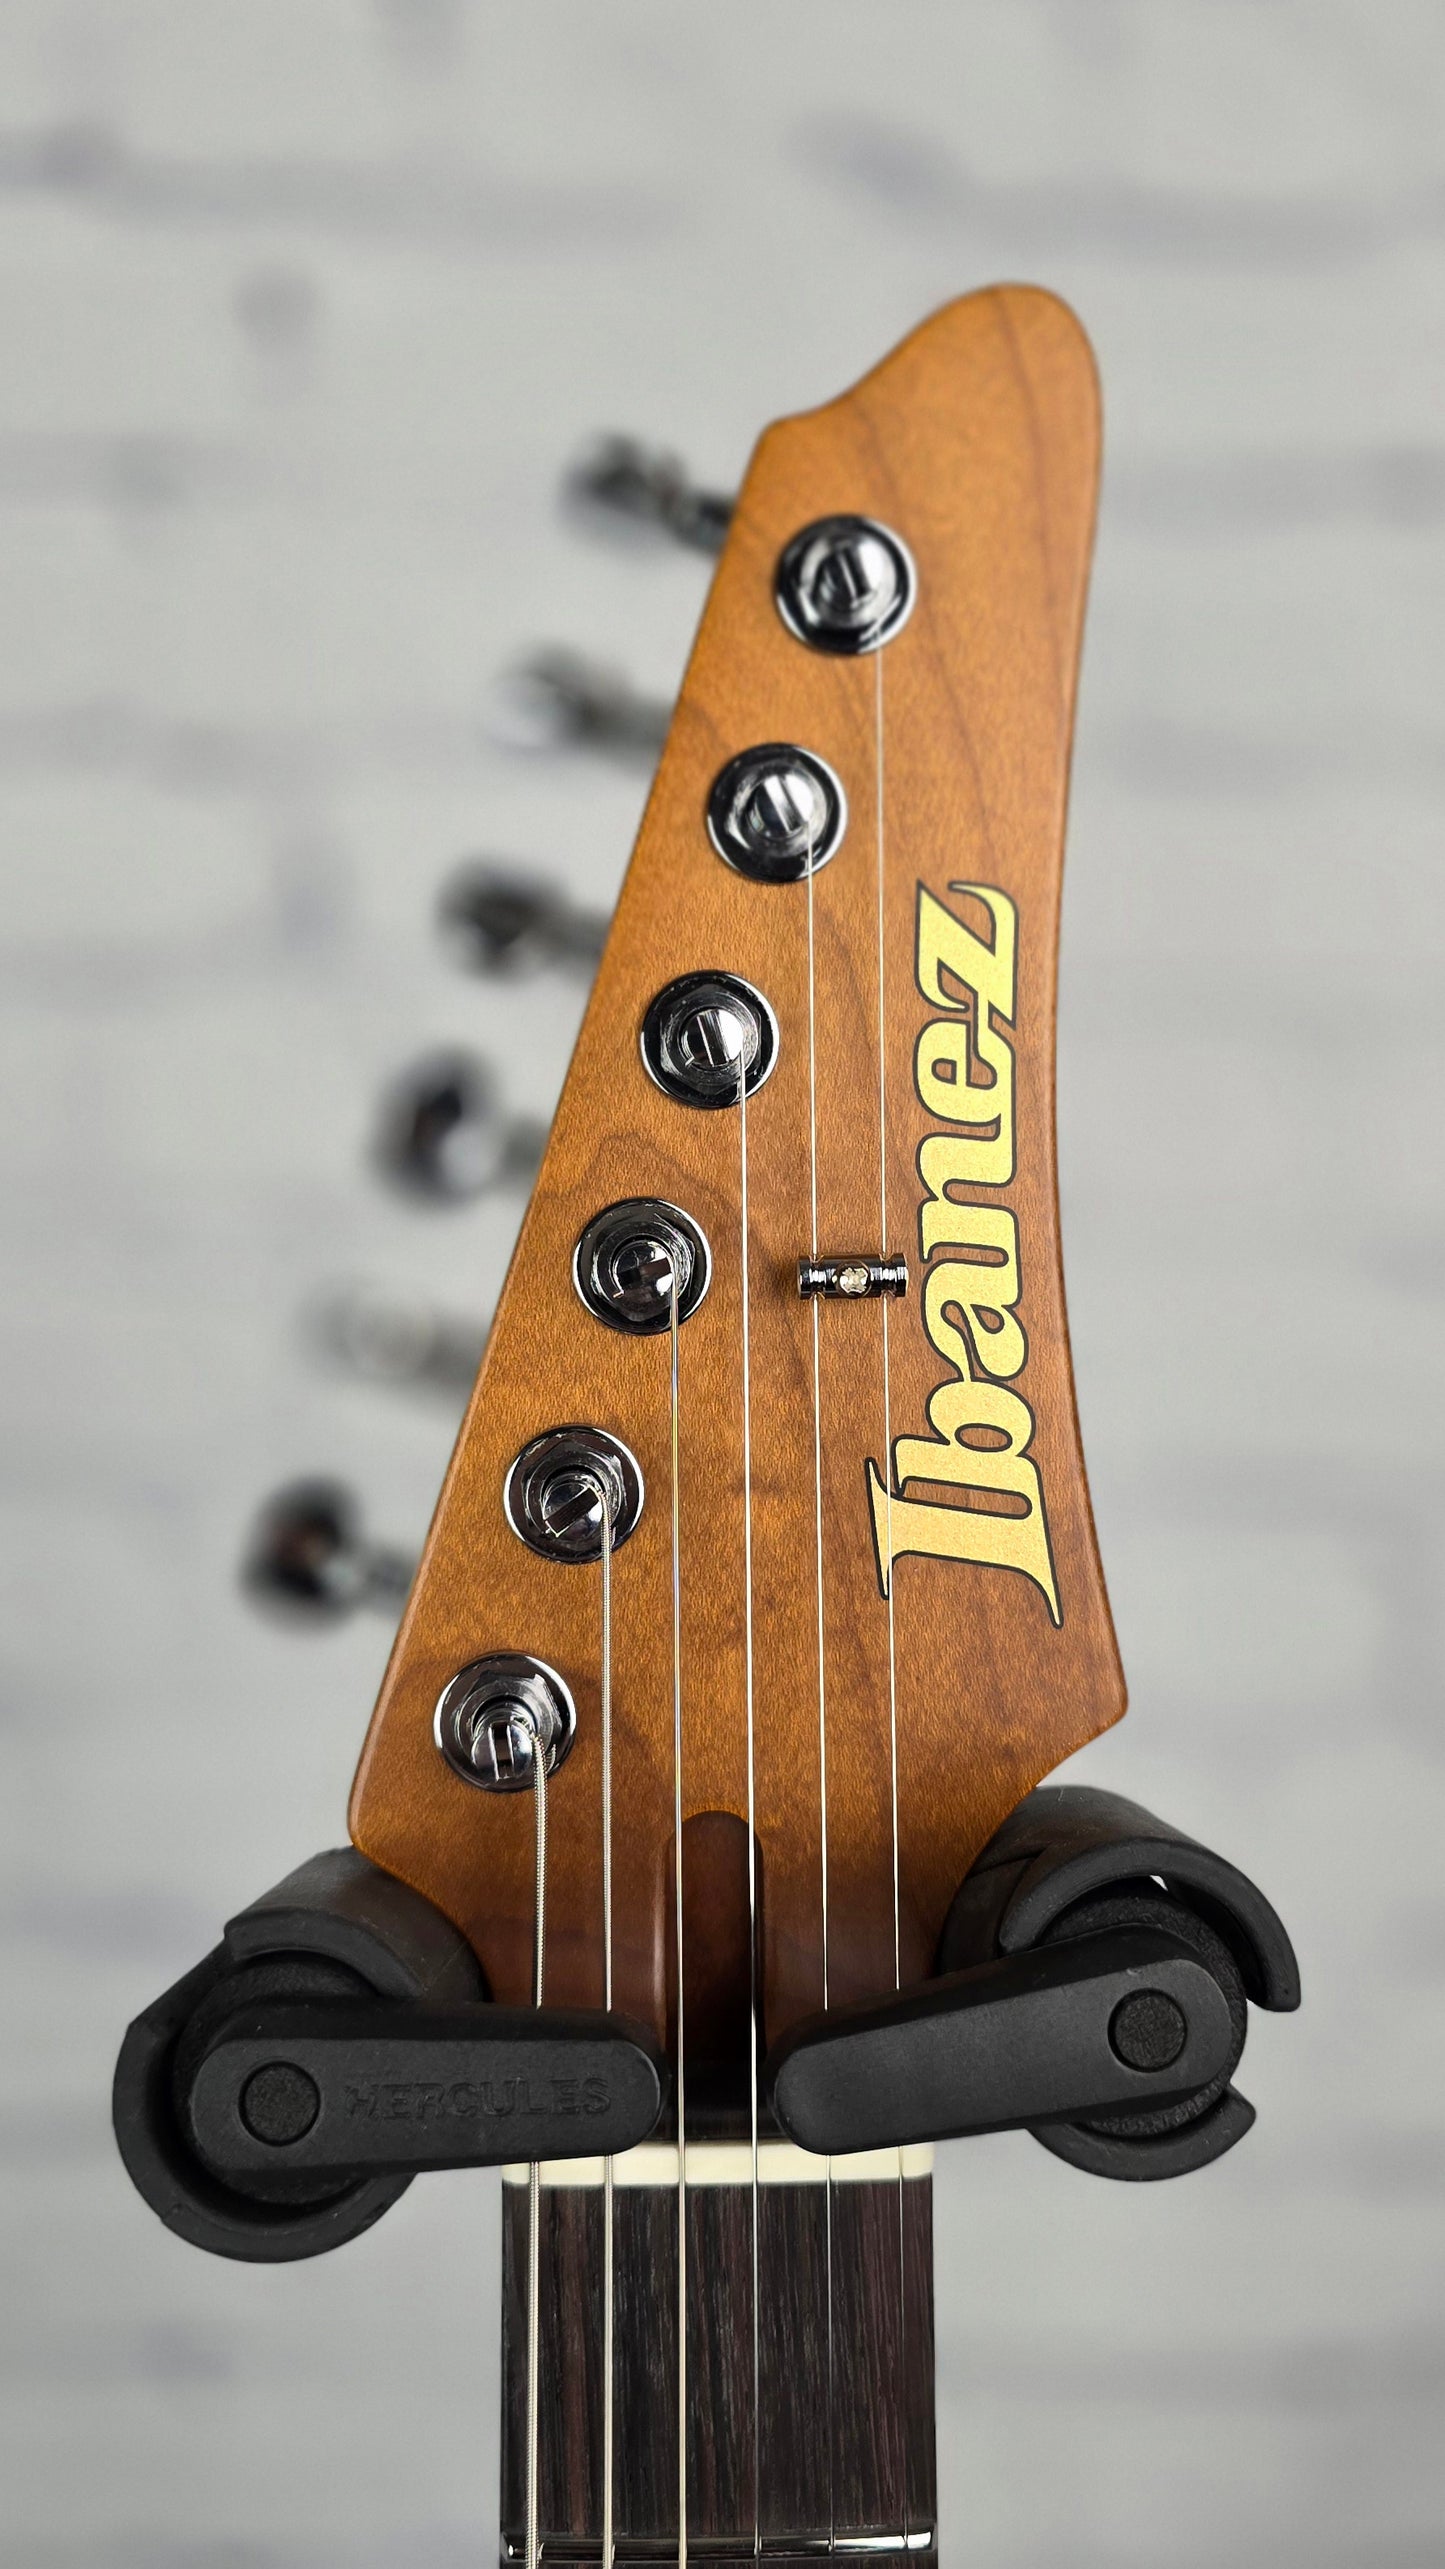 Ibanez TQMS1 CTB Tom Quayle Signature Electric Guitar Celeste Blue